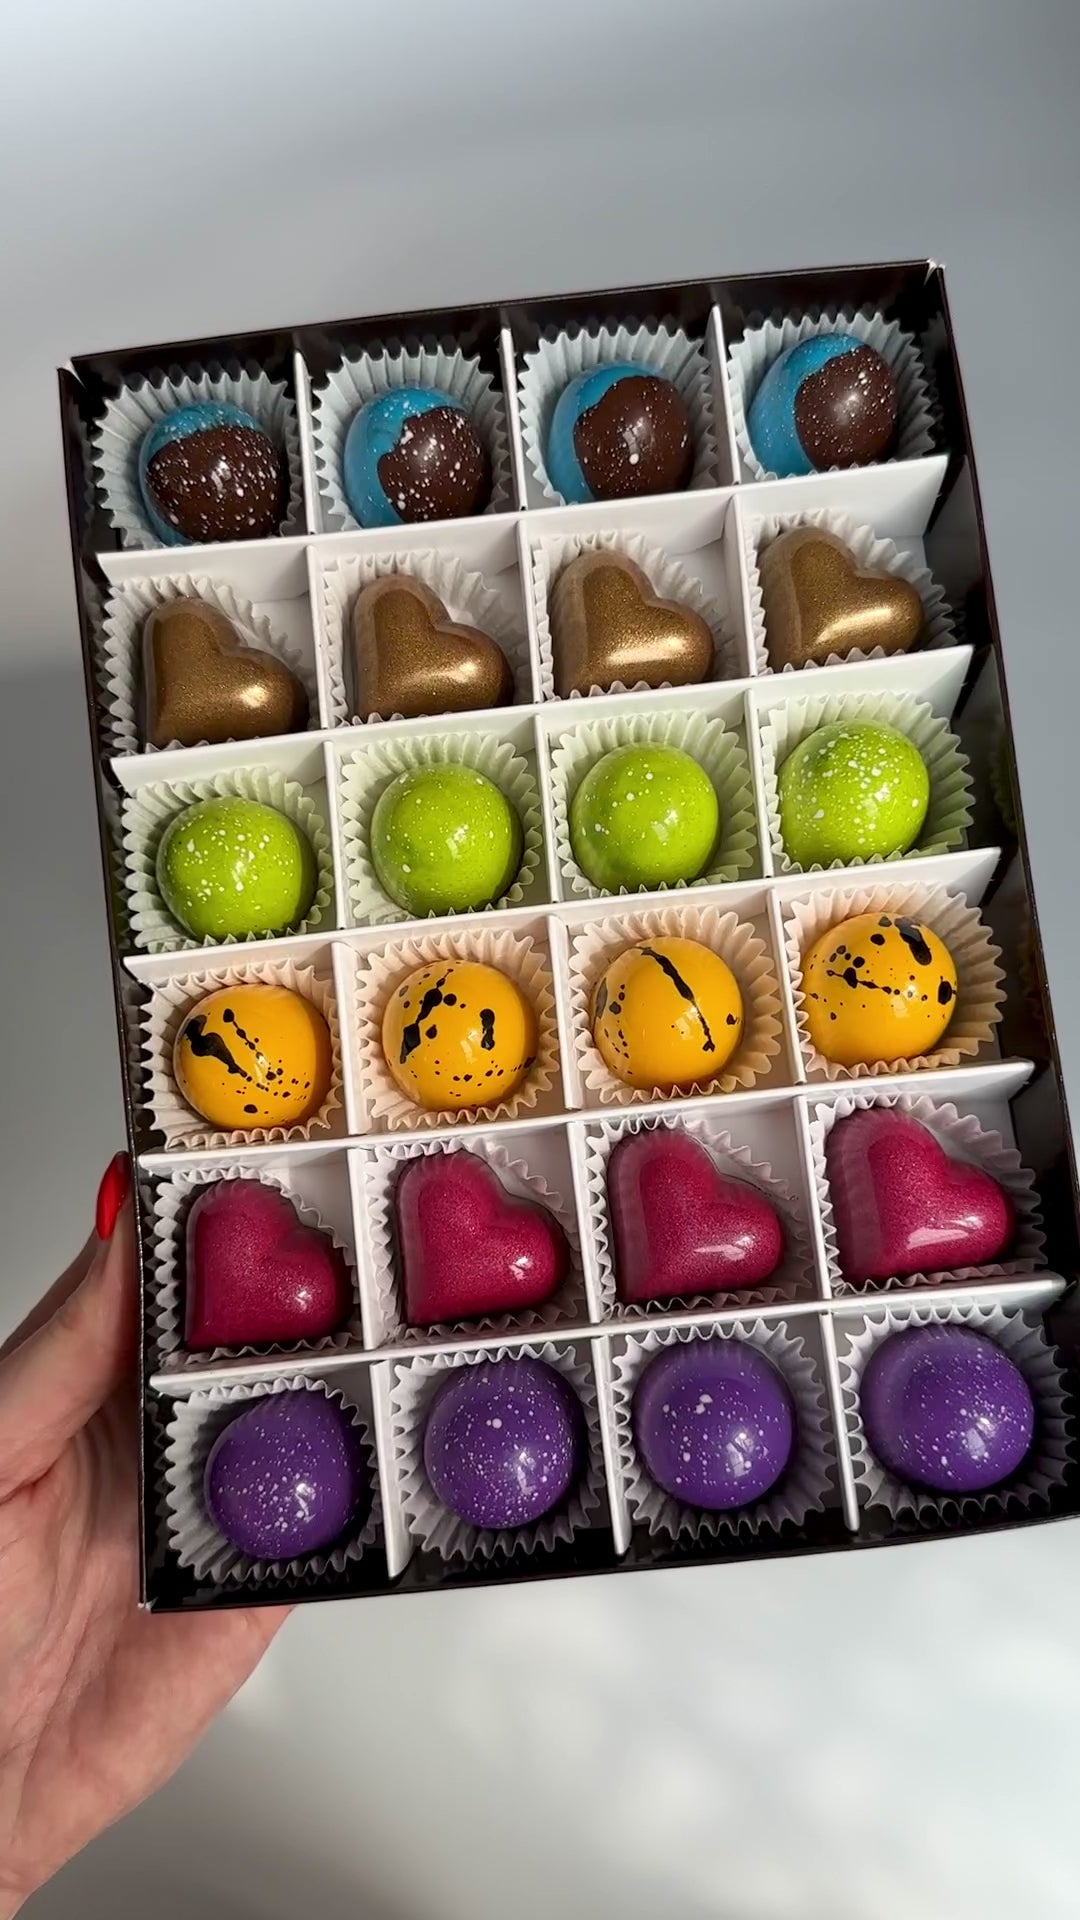 24 Chocolate Luxury Selection Box